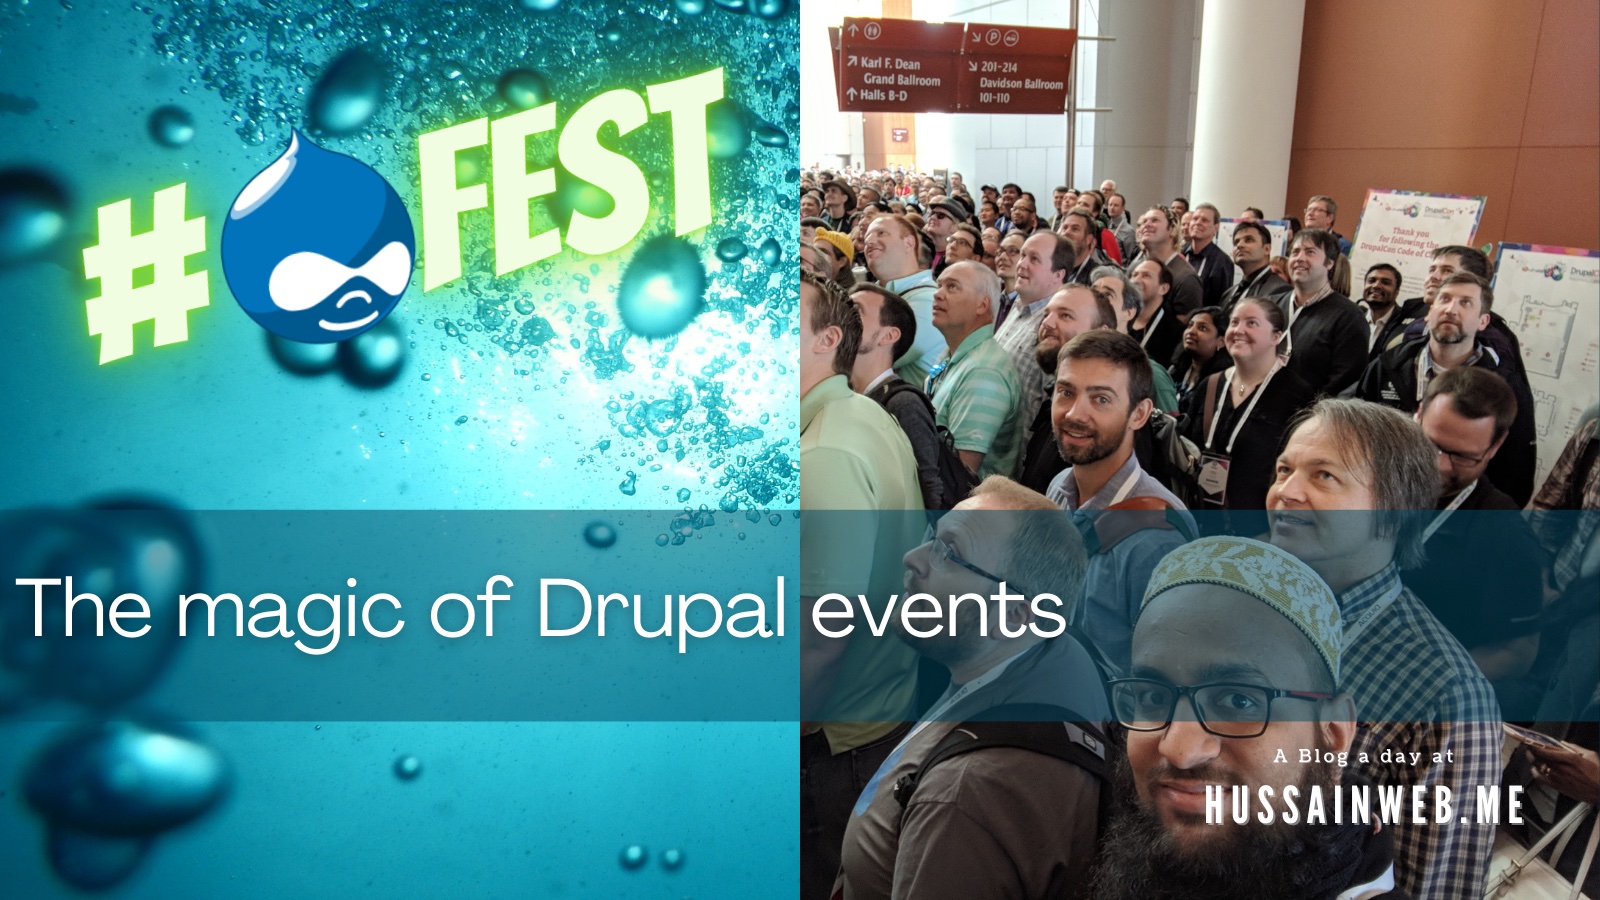 The magic of Drupal events